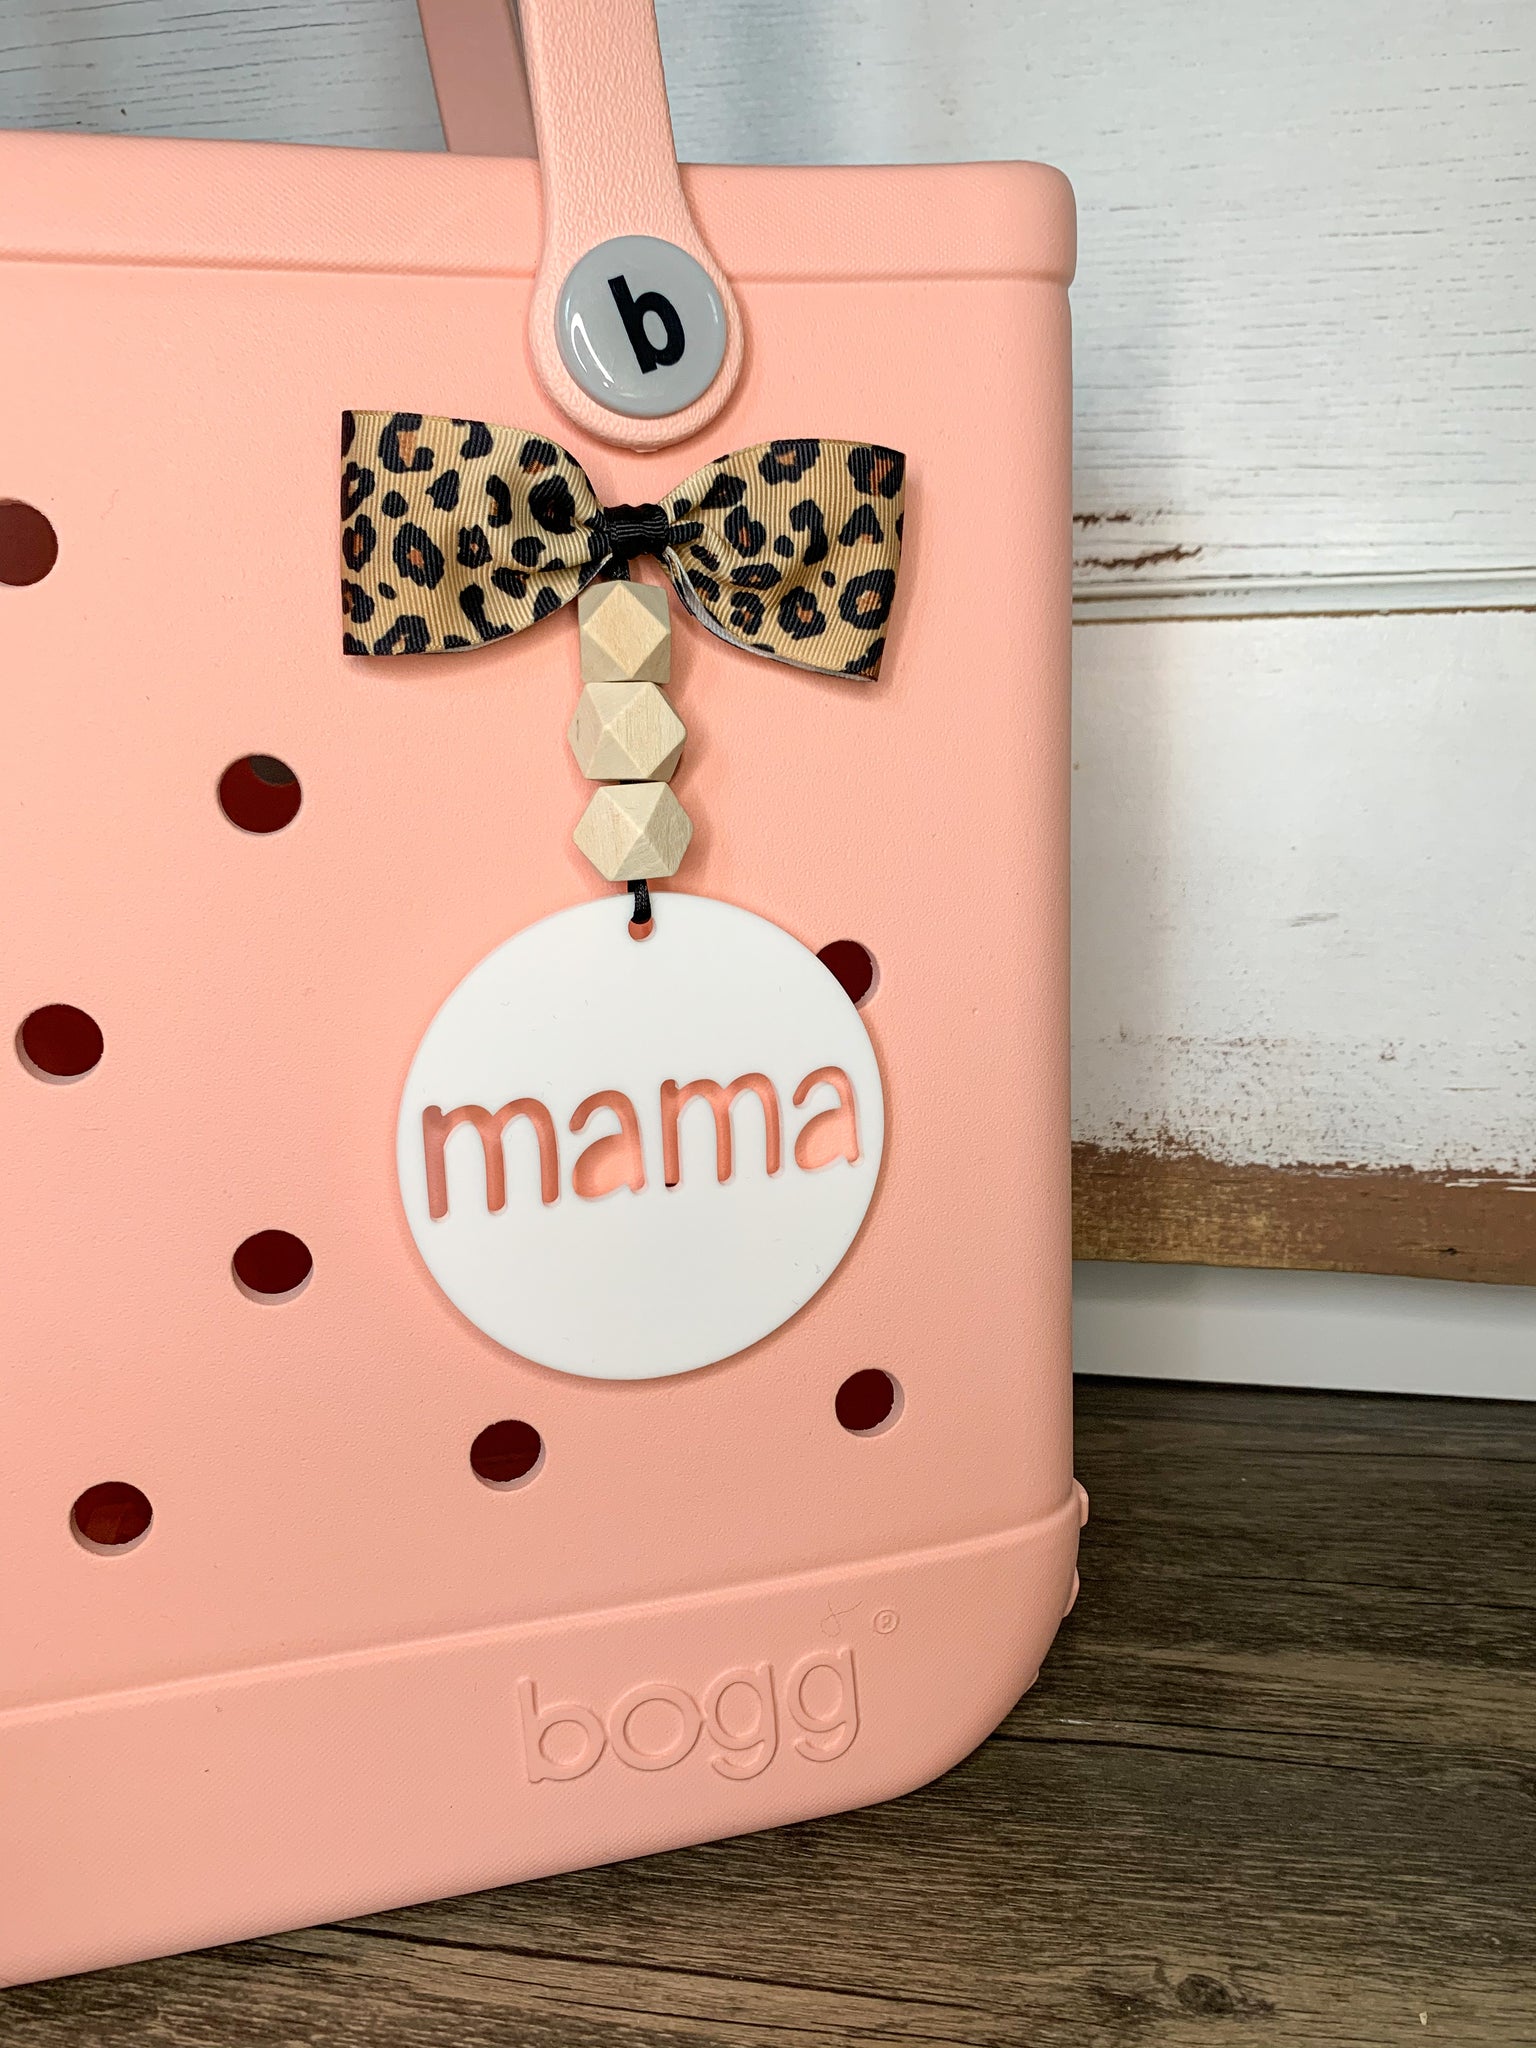 Mama Bear Bogg Bag Tag Choose From a Tag or Charm Purse Bag 